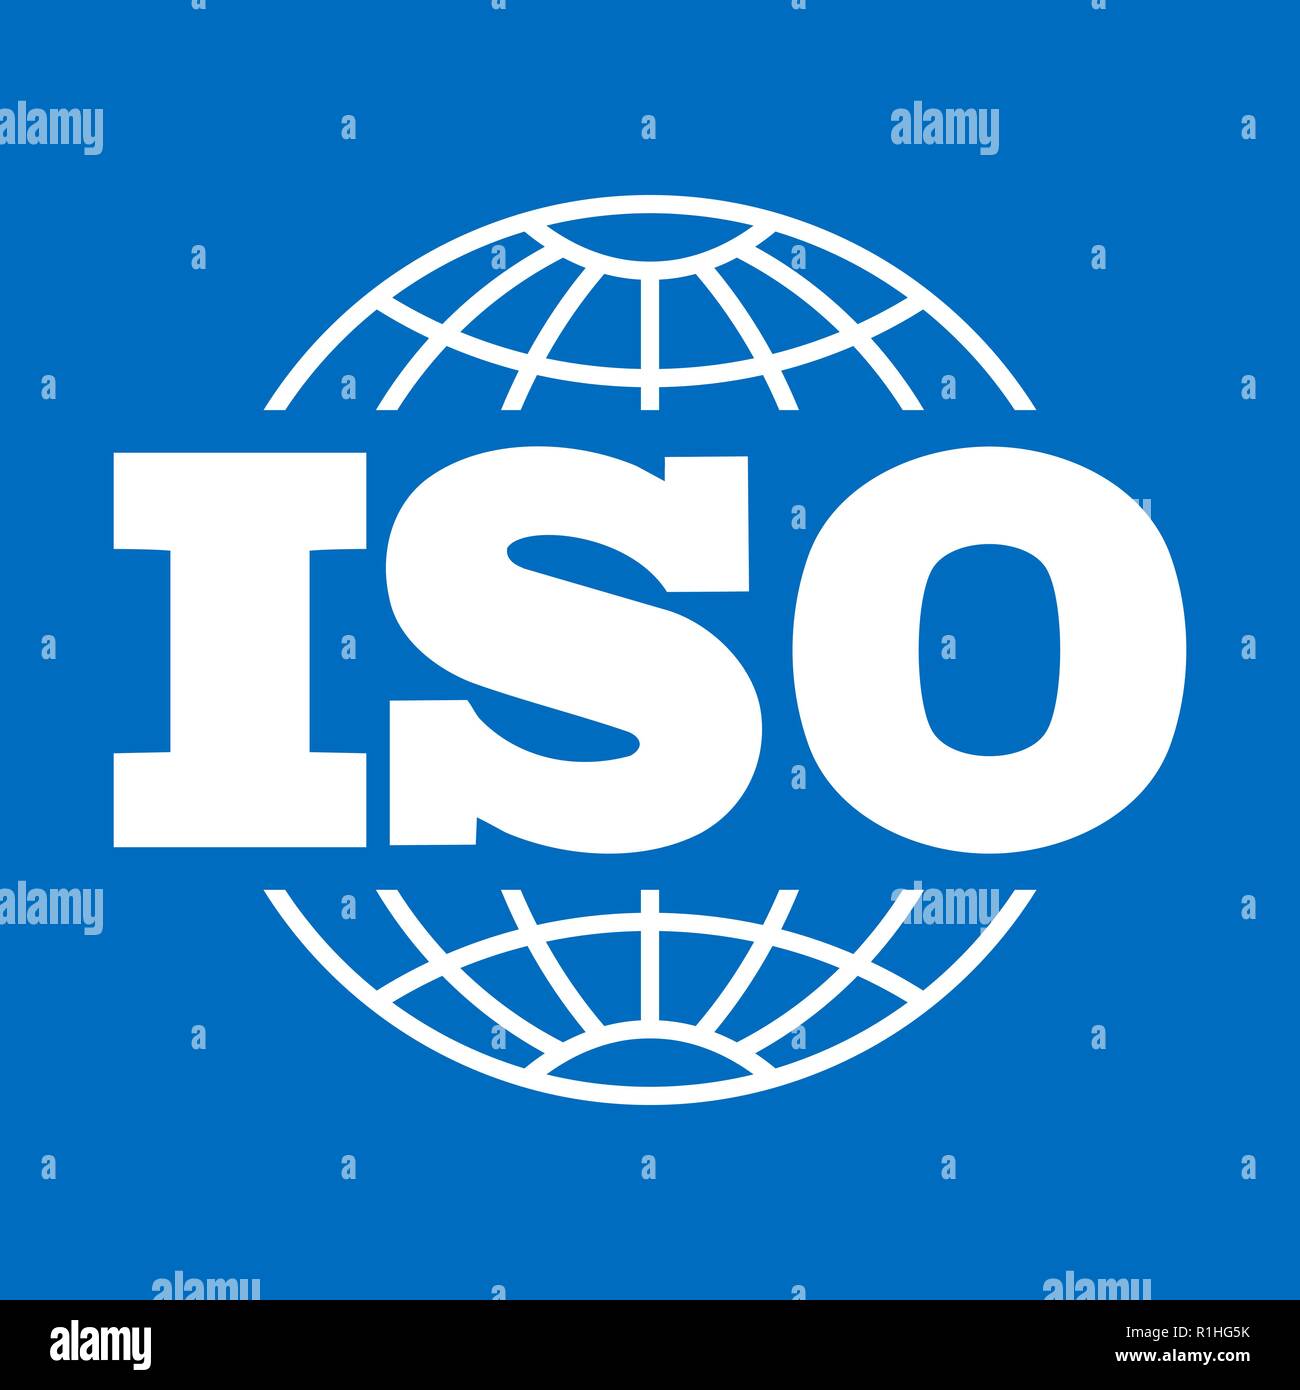 ISO icon. International Organization for Standardization sign, symbol